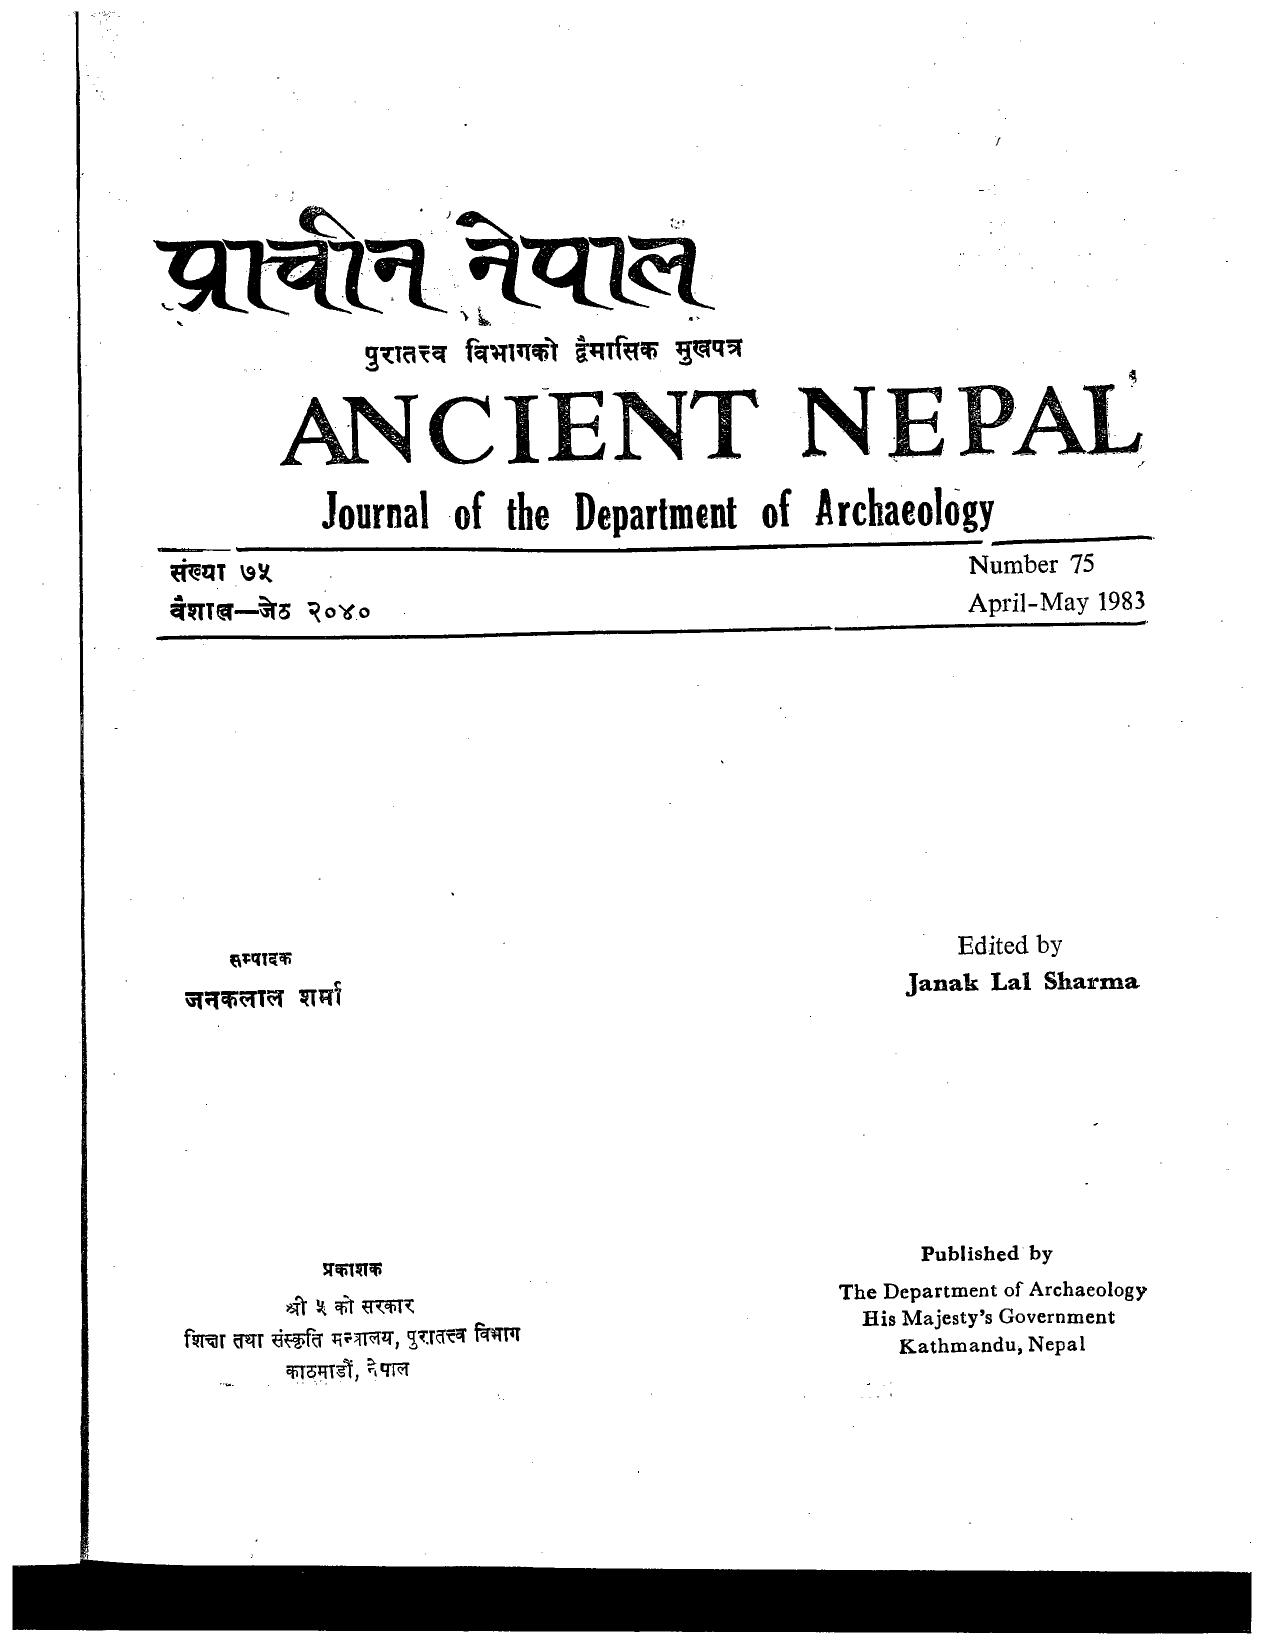 Ancient Nepal 75